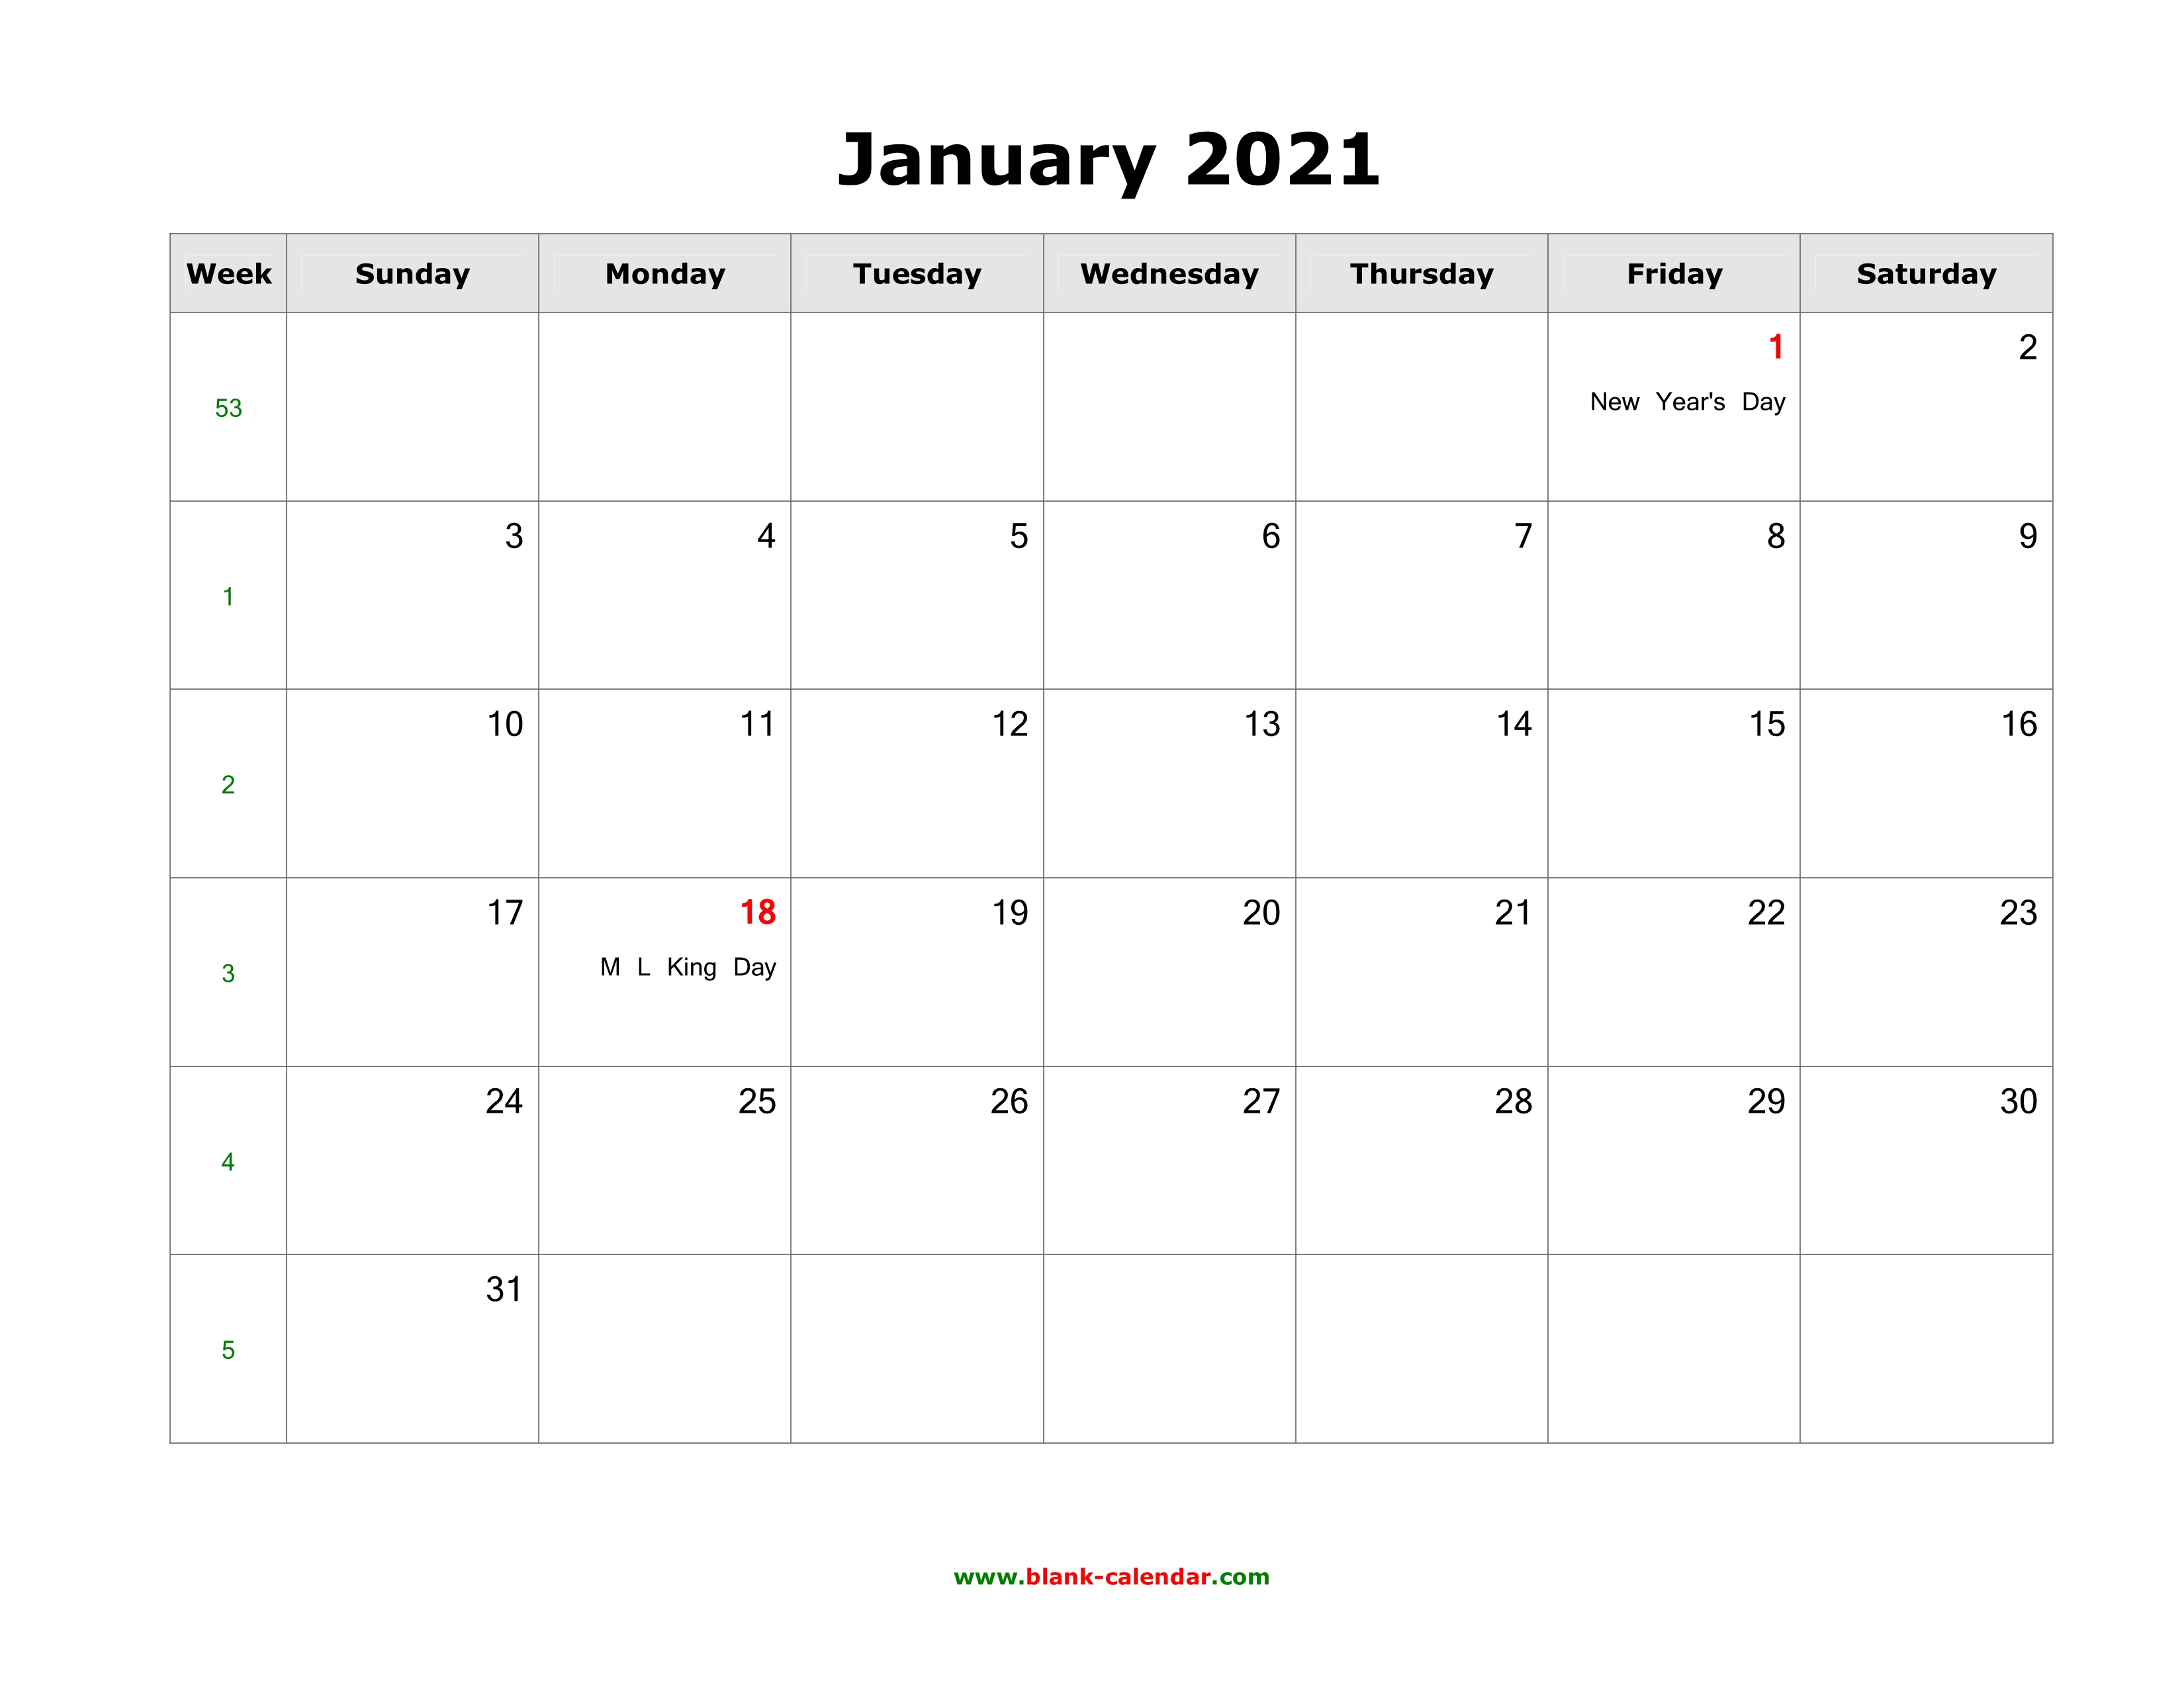 January 2021 Blank Calendar Free Download Calendar Templates Just free download, open it in ms word, libreoffice, open office, google doc, etc. january 2021 blank calendar free